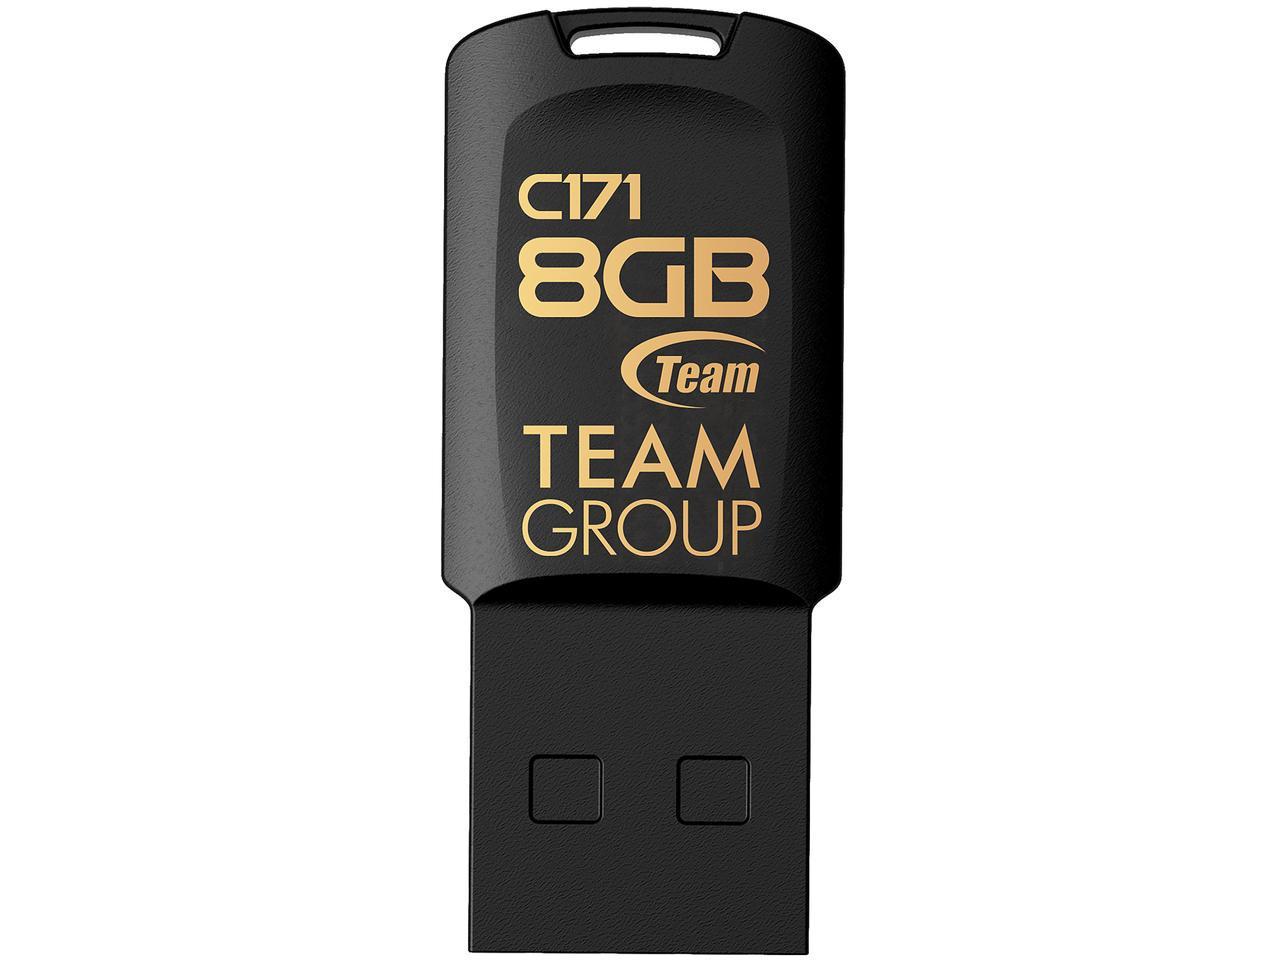 USB памет Team Group C171, 8GB, USB 2.0, Черен-1